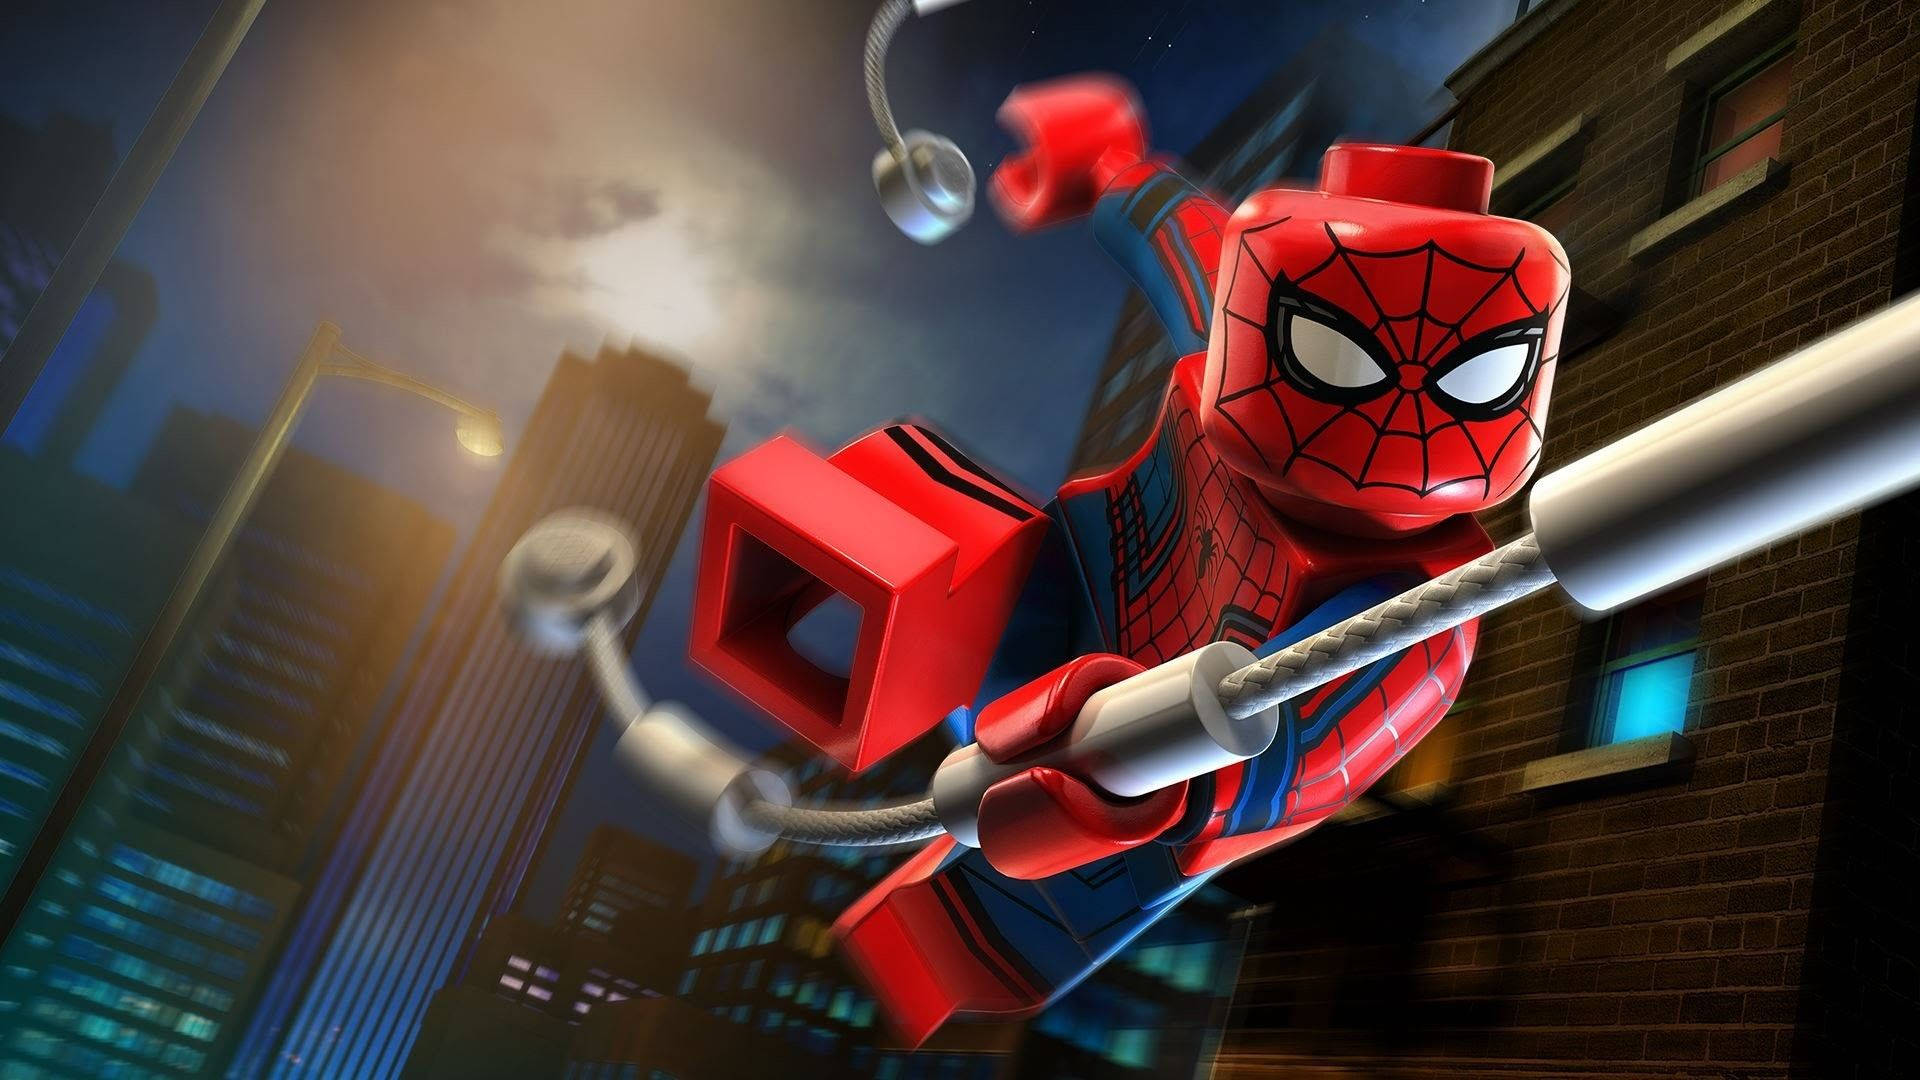 Iron Spiderman Lego Nighttime Cityscape Wallpaper